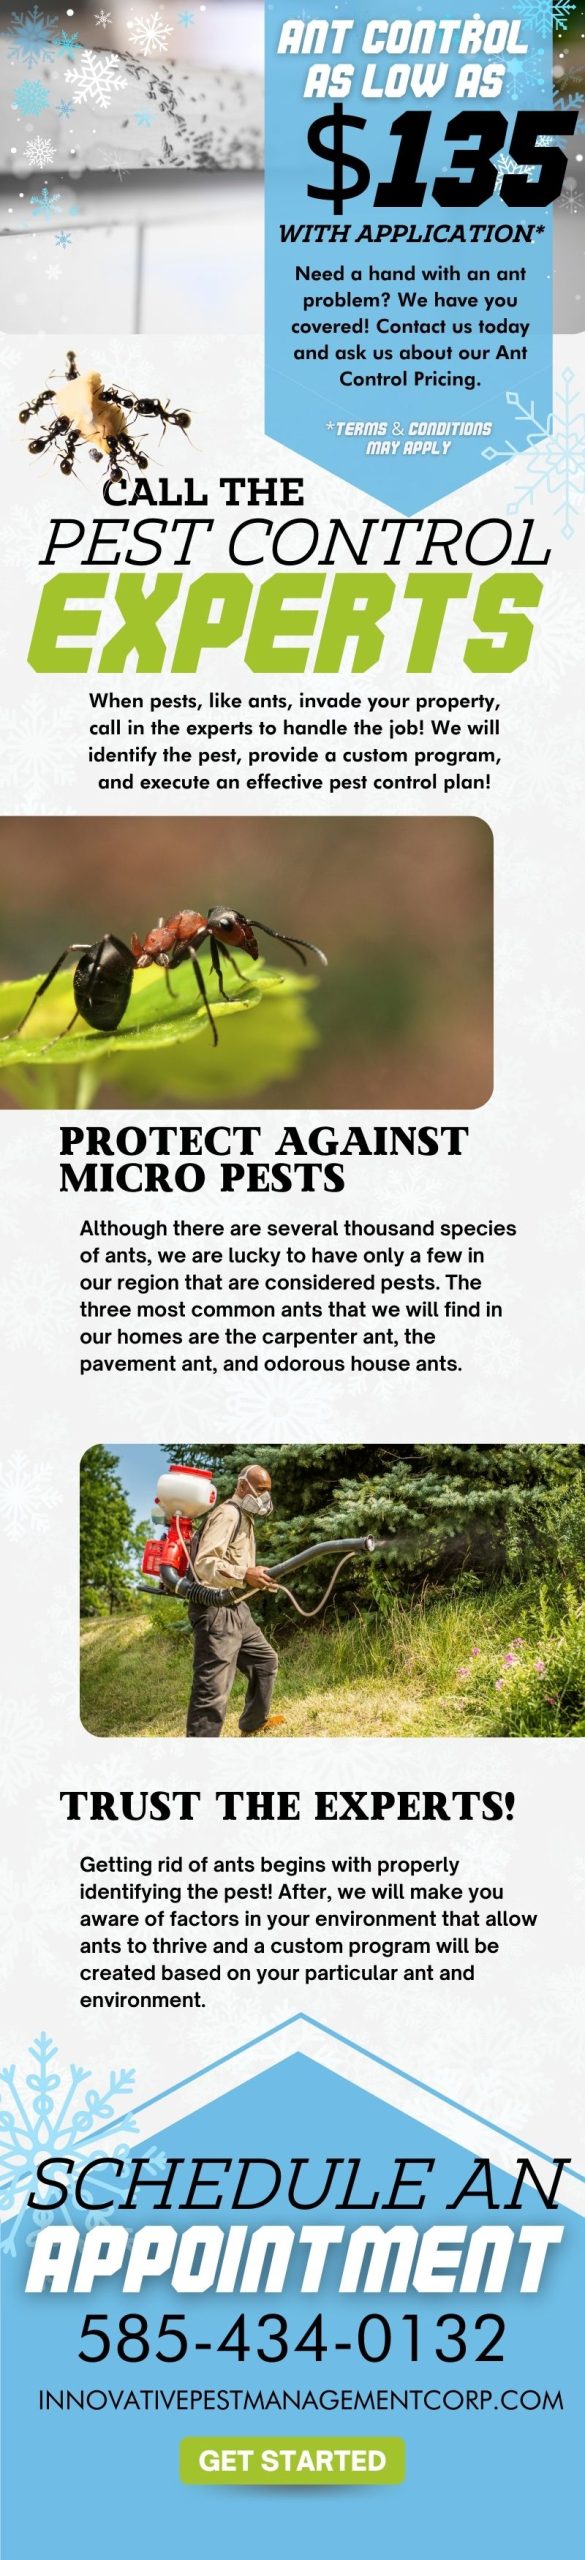 pest control experts